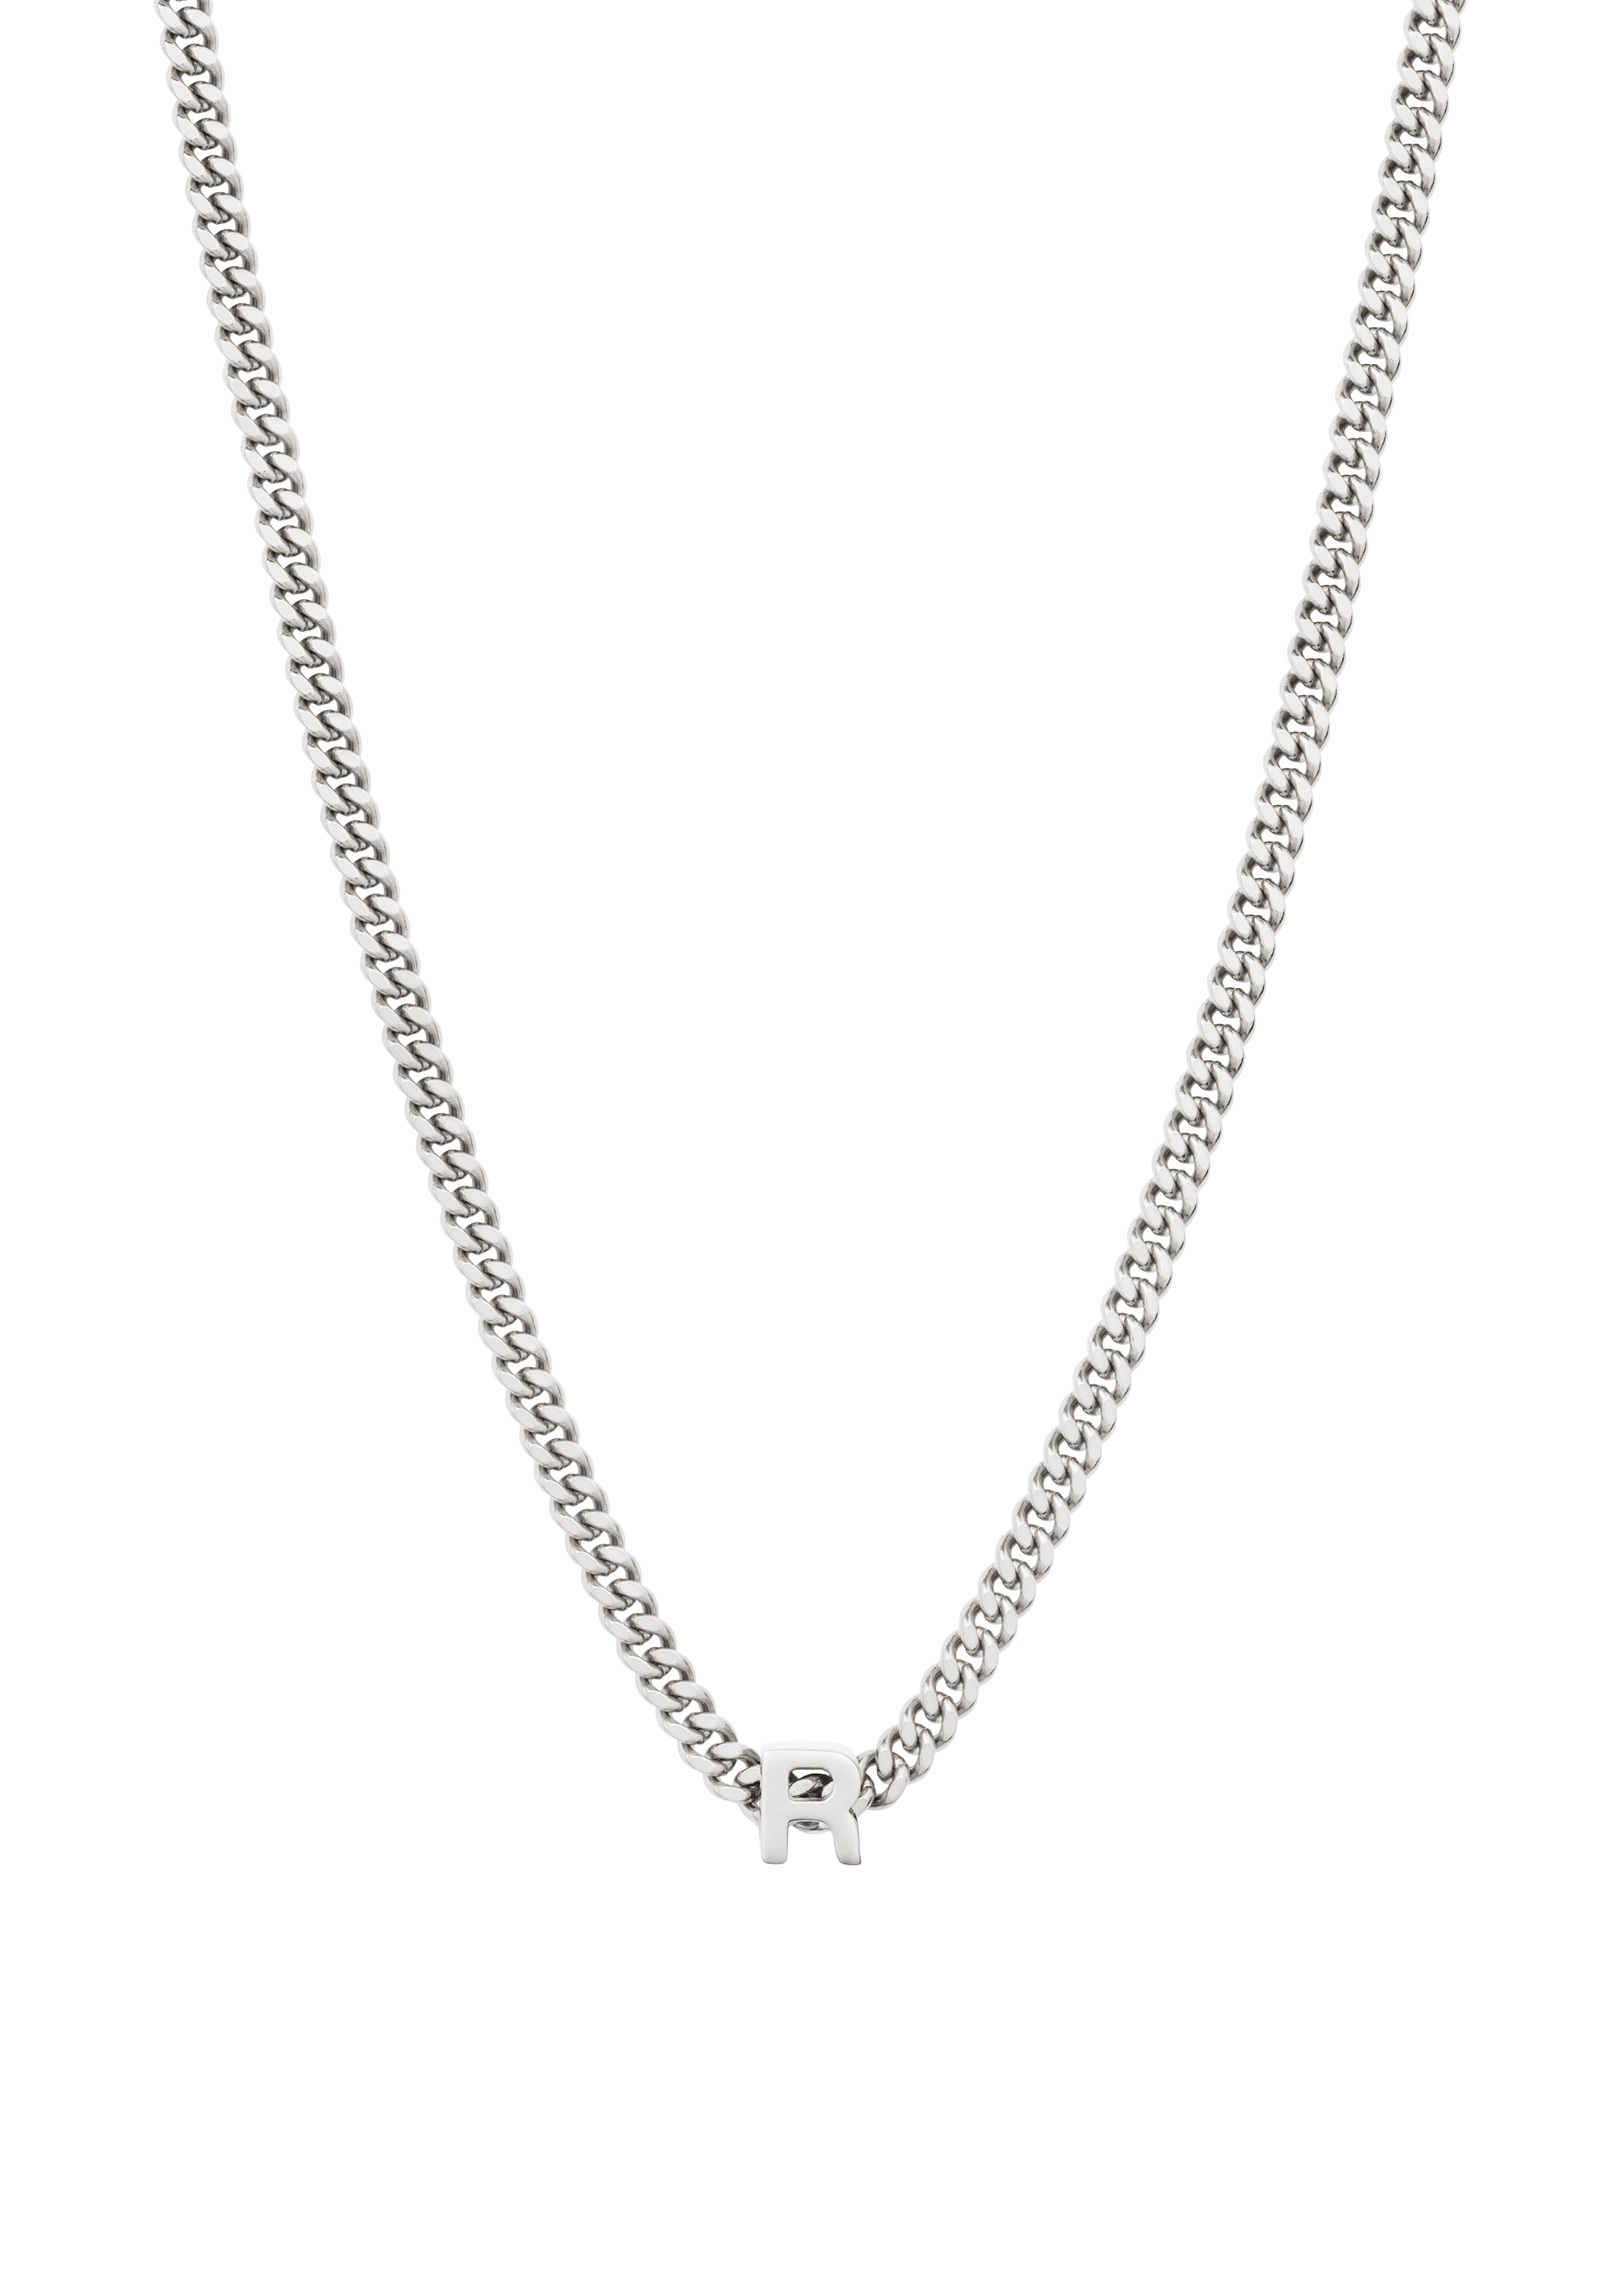 alphabet necklace with pendant R